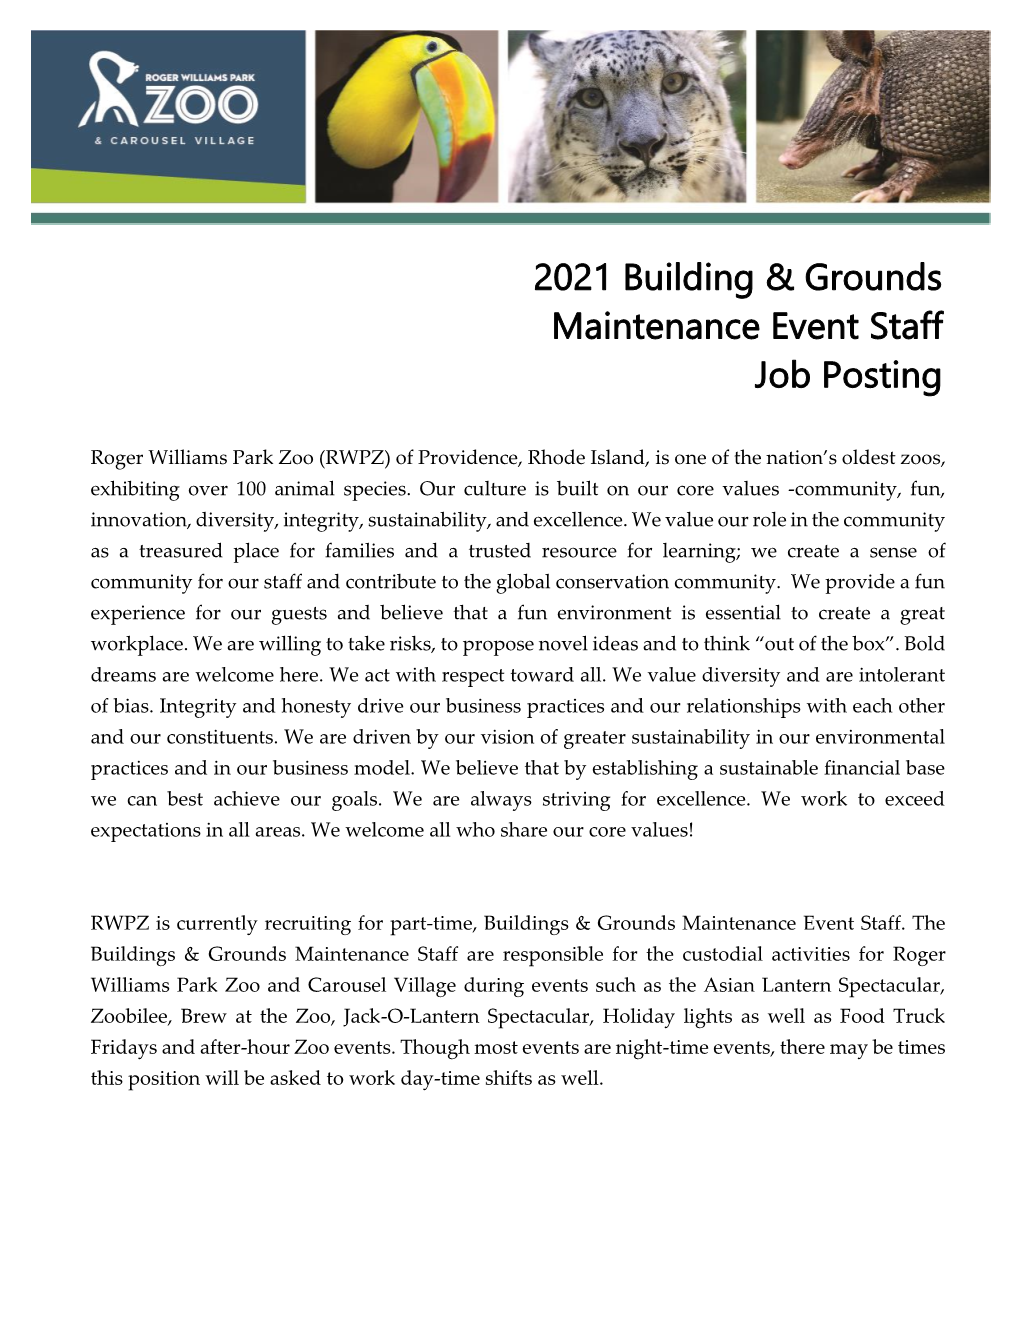 2021 Building & Grounds Maintenance Event Staff Job Posting